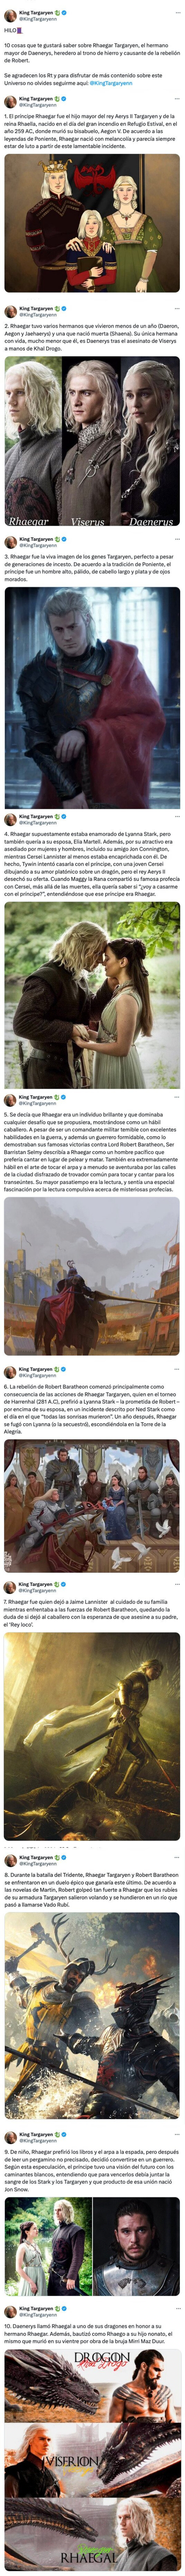 GALERÍA: 10 cosas que te gustará saber sobre Rhaegar Targaryen, el hermano mayor de Daenerys. Por @KingTargaryenn